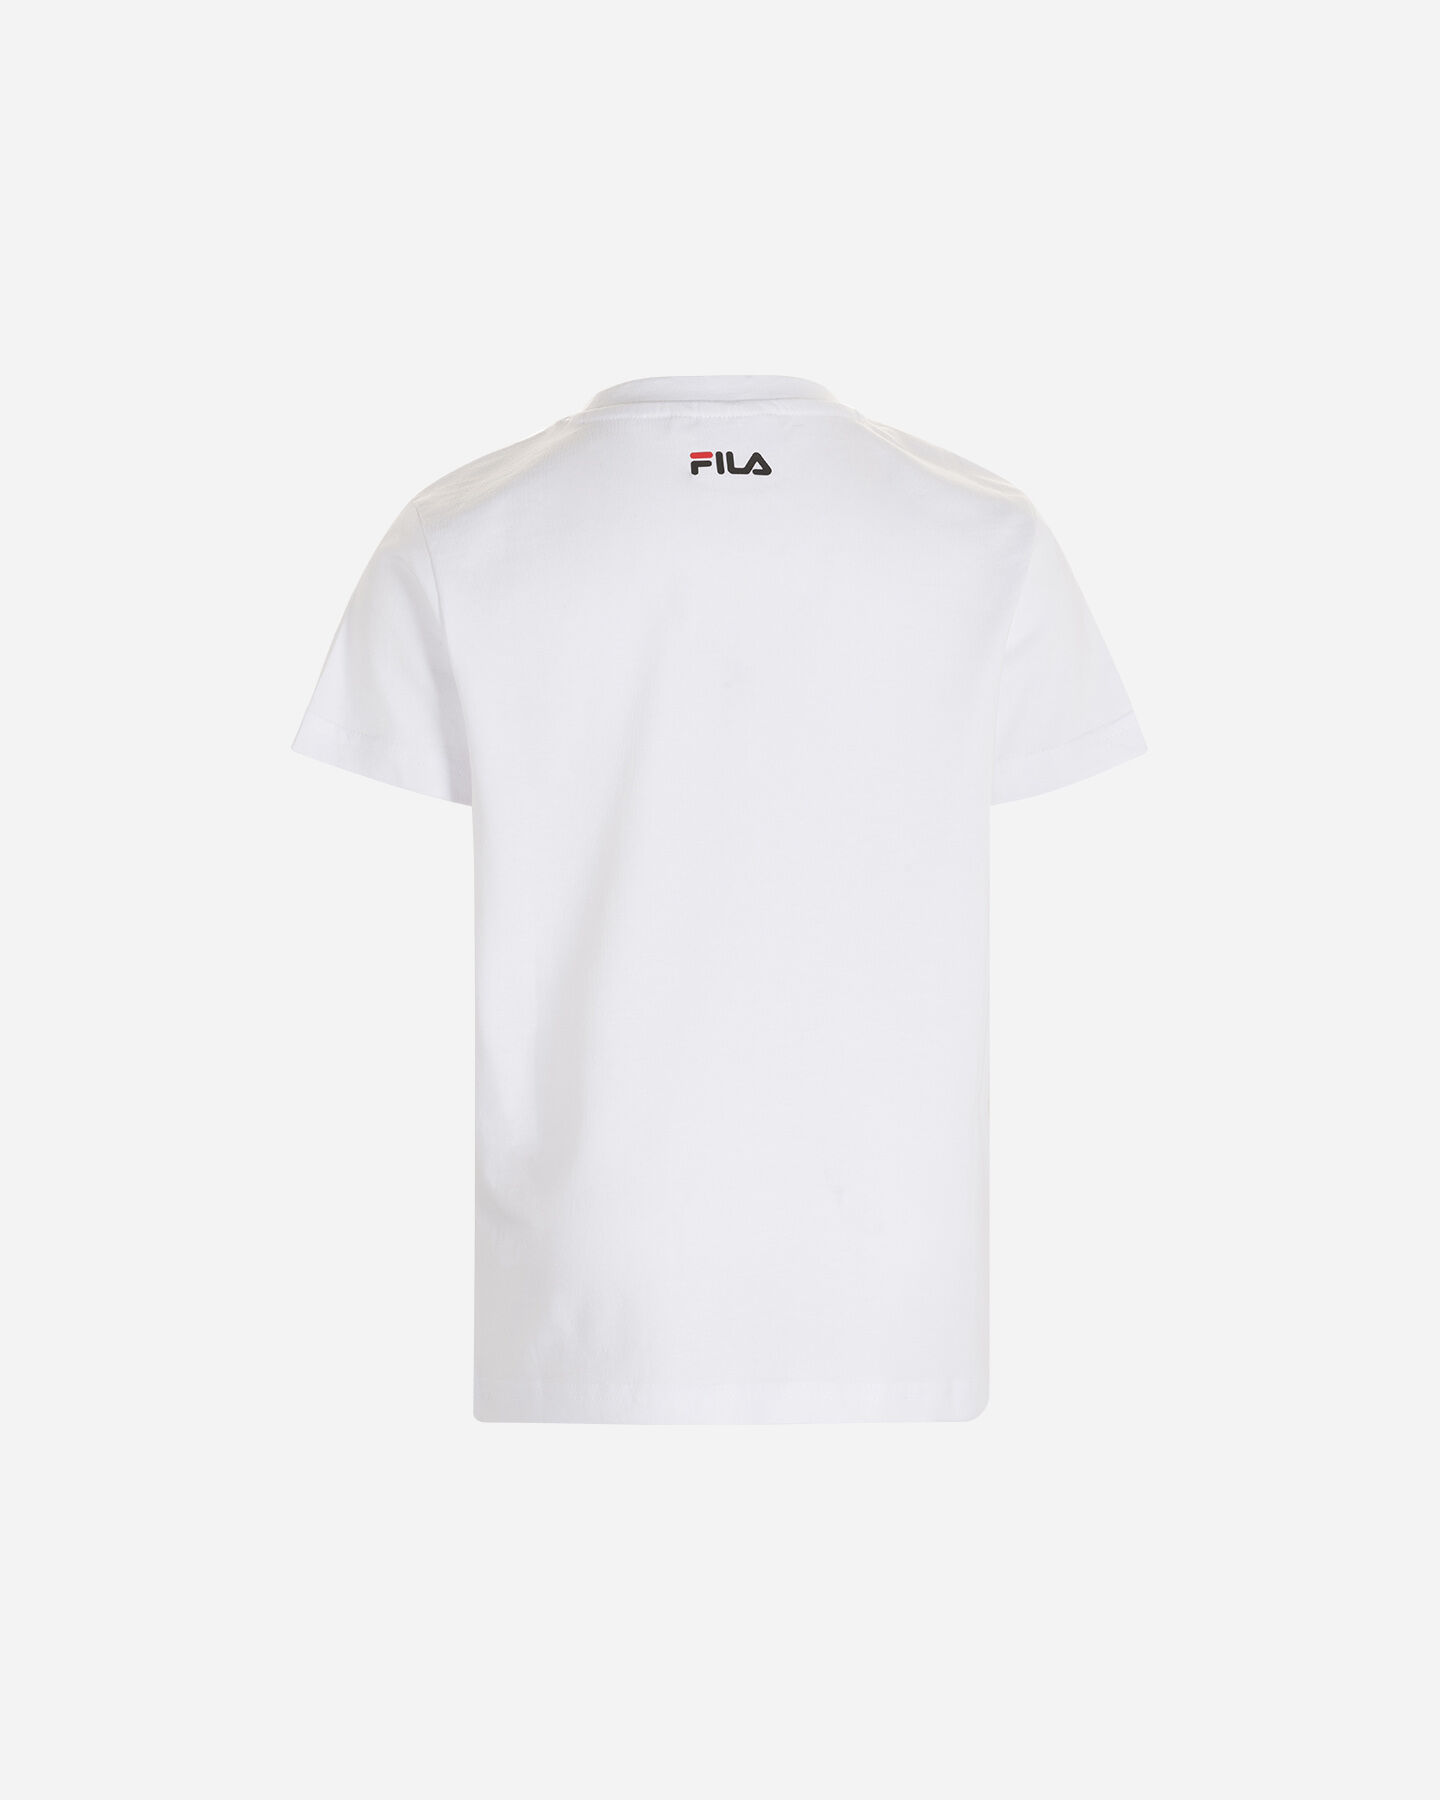  T-Shirt FILA STREETWEAR LOGO JR S4107157|001|6A scatto 1